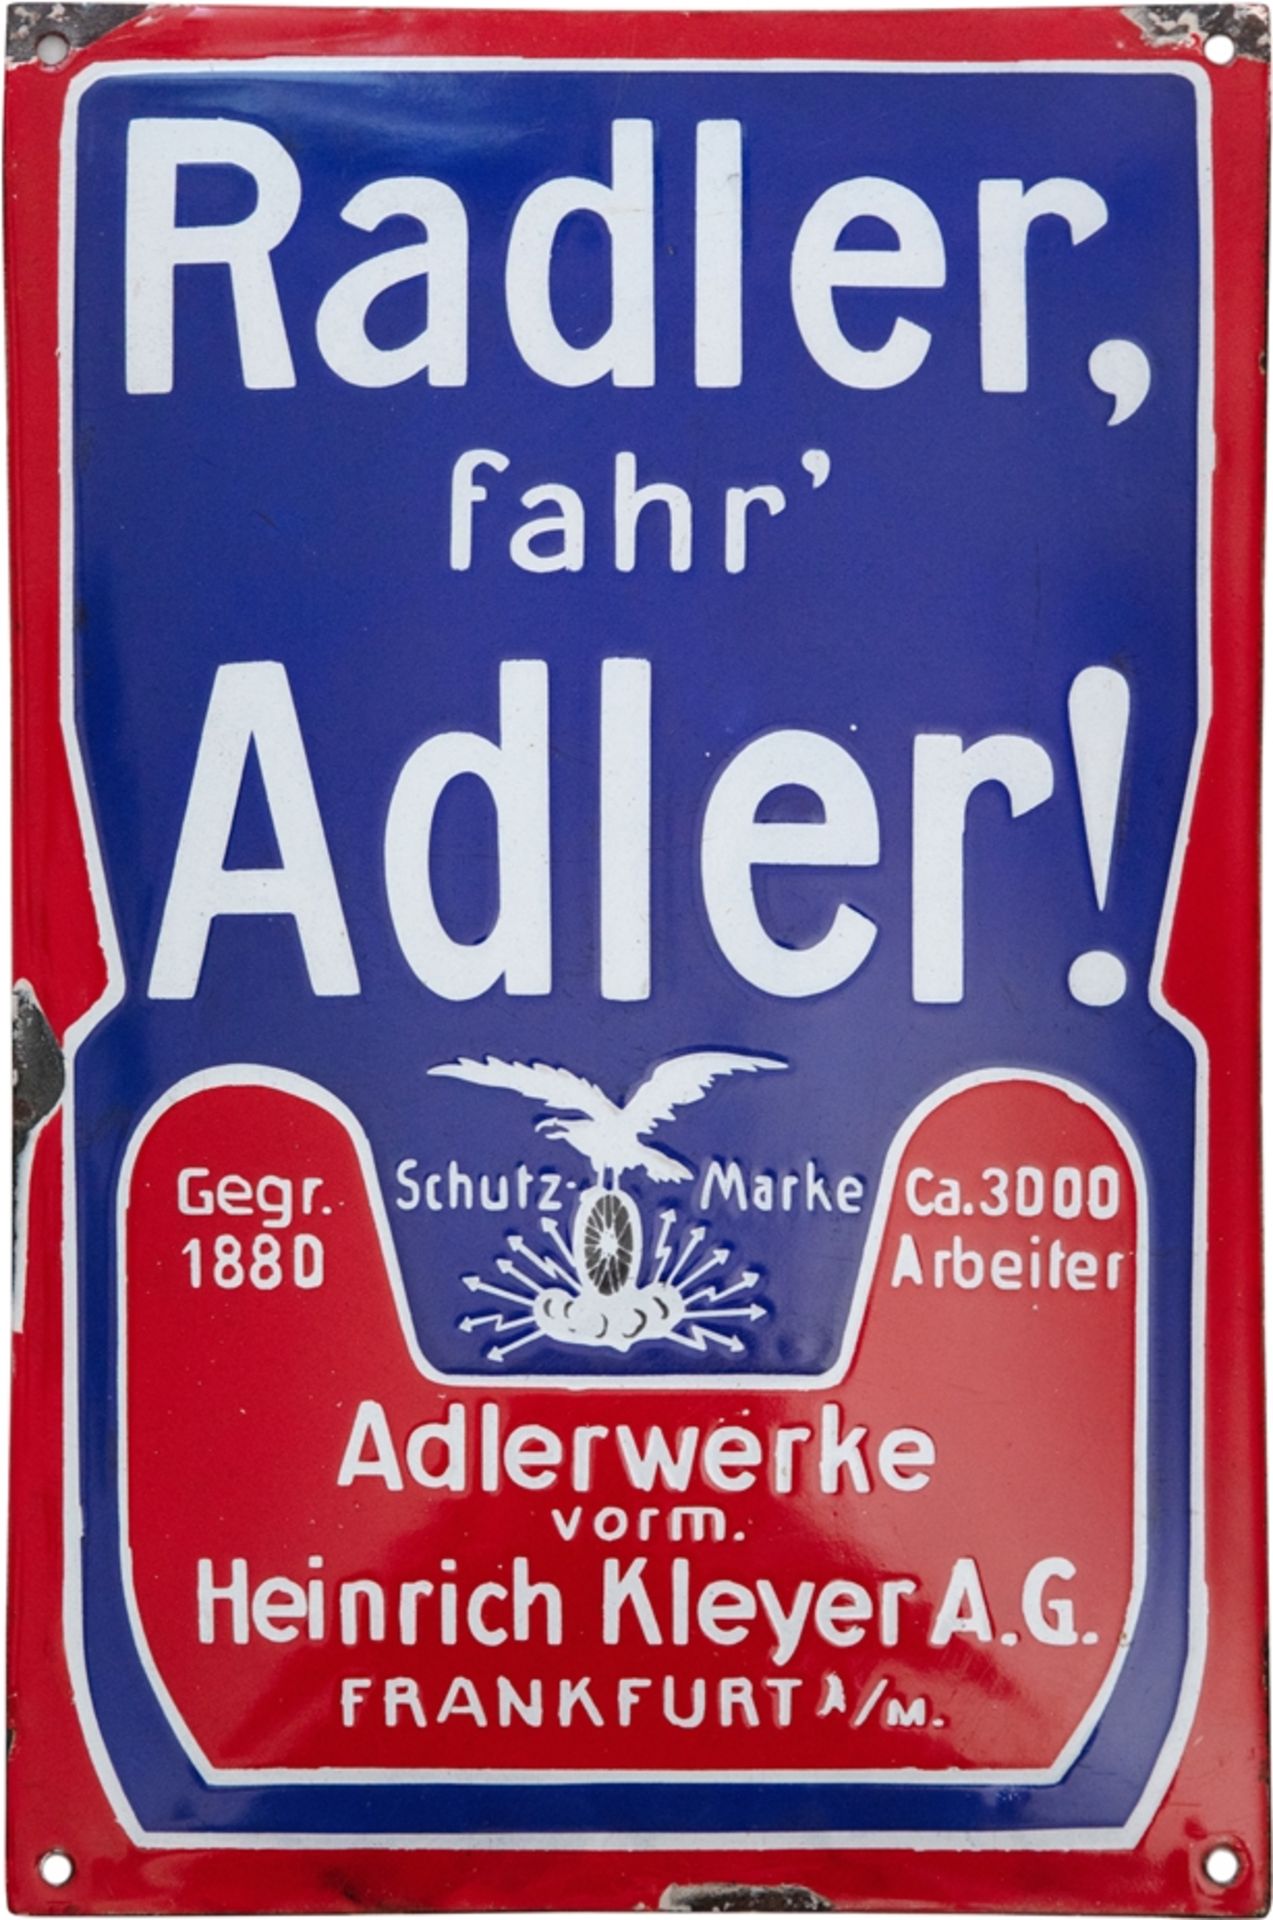 Emailschild Radler, fahr Adler, Frankfurt am Main, um 1910